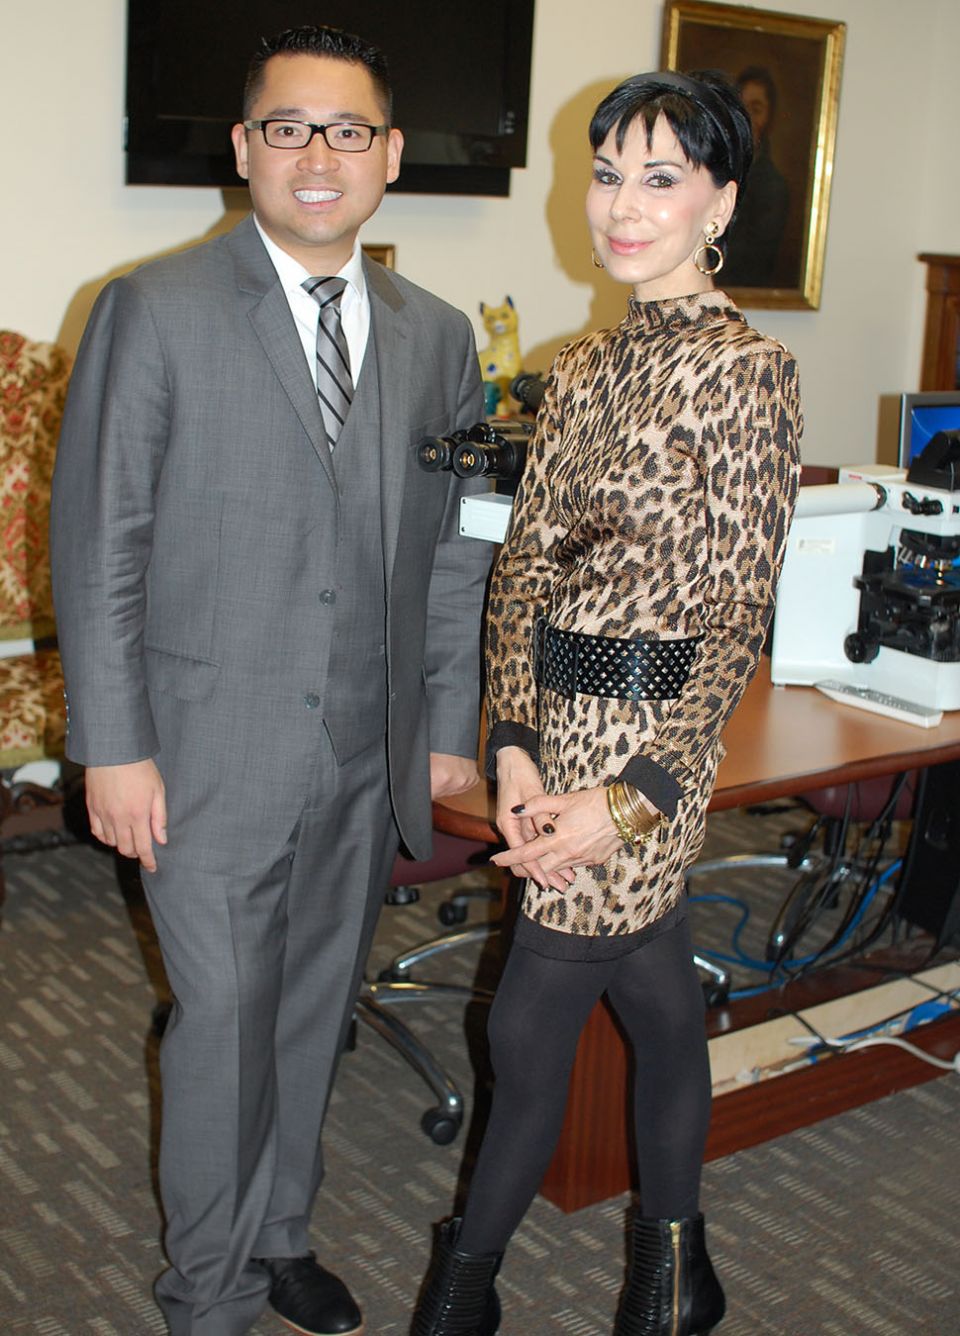 Dr. Cynthia M. Magro with her 2017-2018 dermatopathology fellow, Dr. Allen P. Miraflor